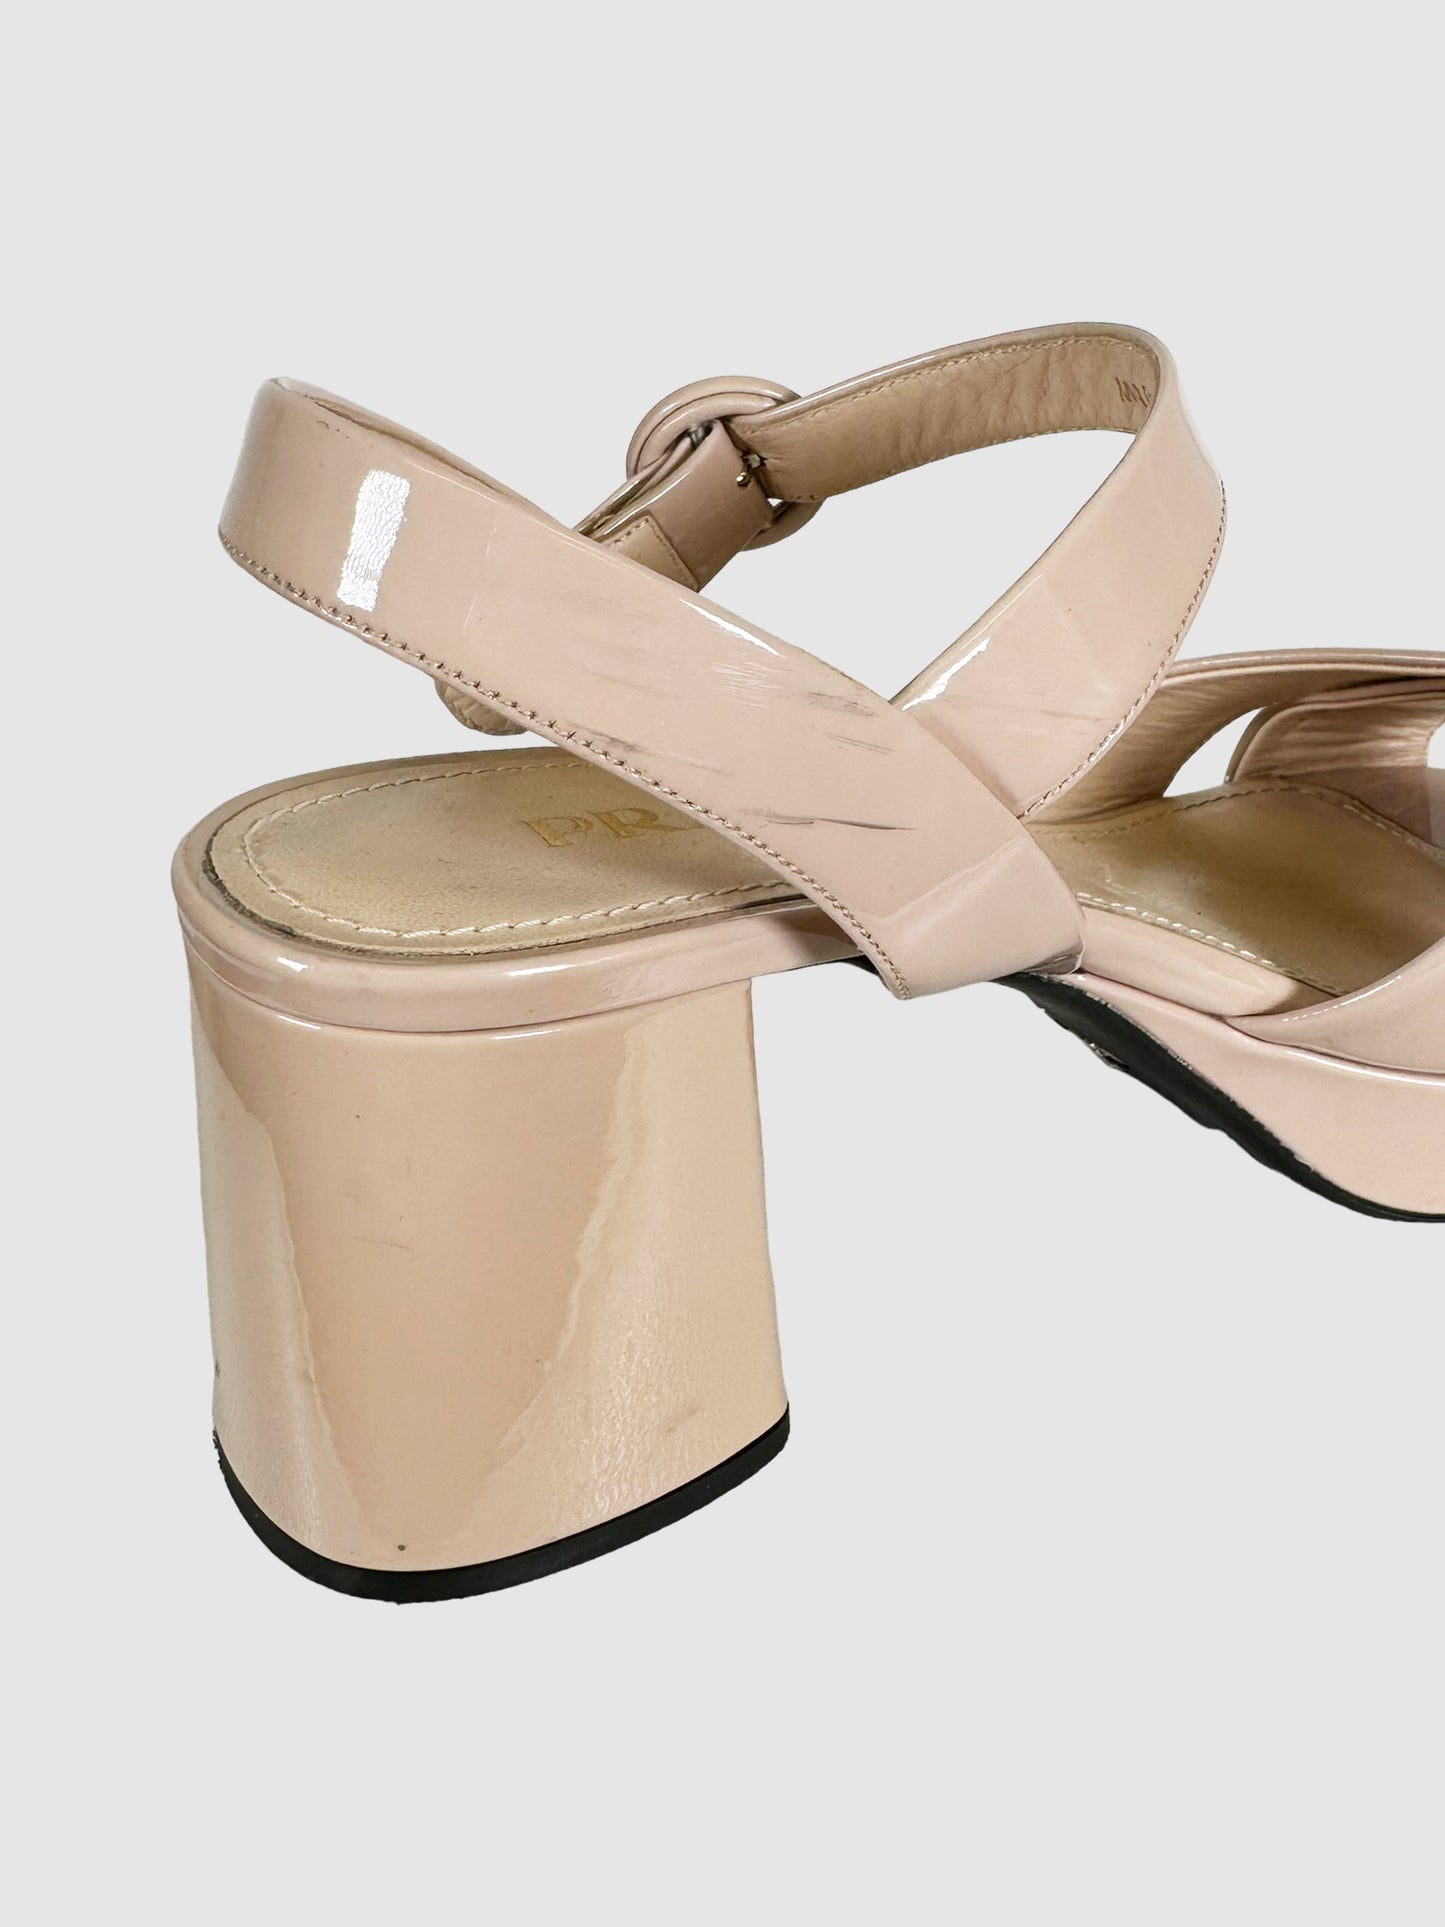 Prada Patent Leather Platform Sandals - Size 38